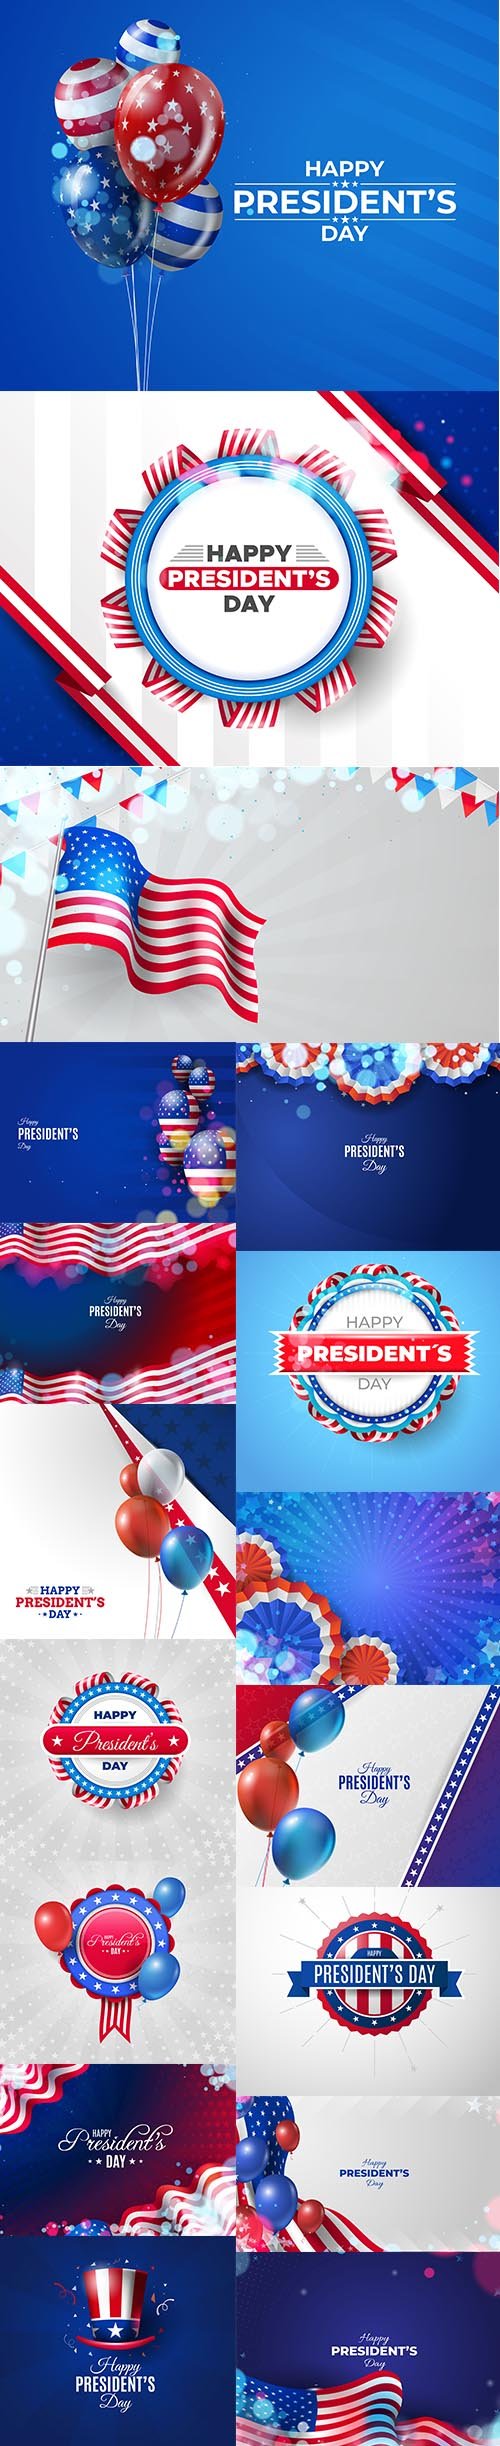 USA Presidents Day Premium Illustrations Set